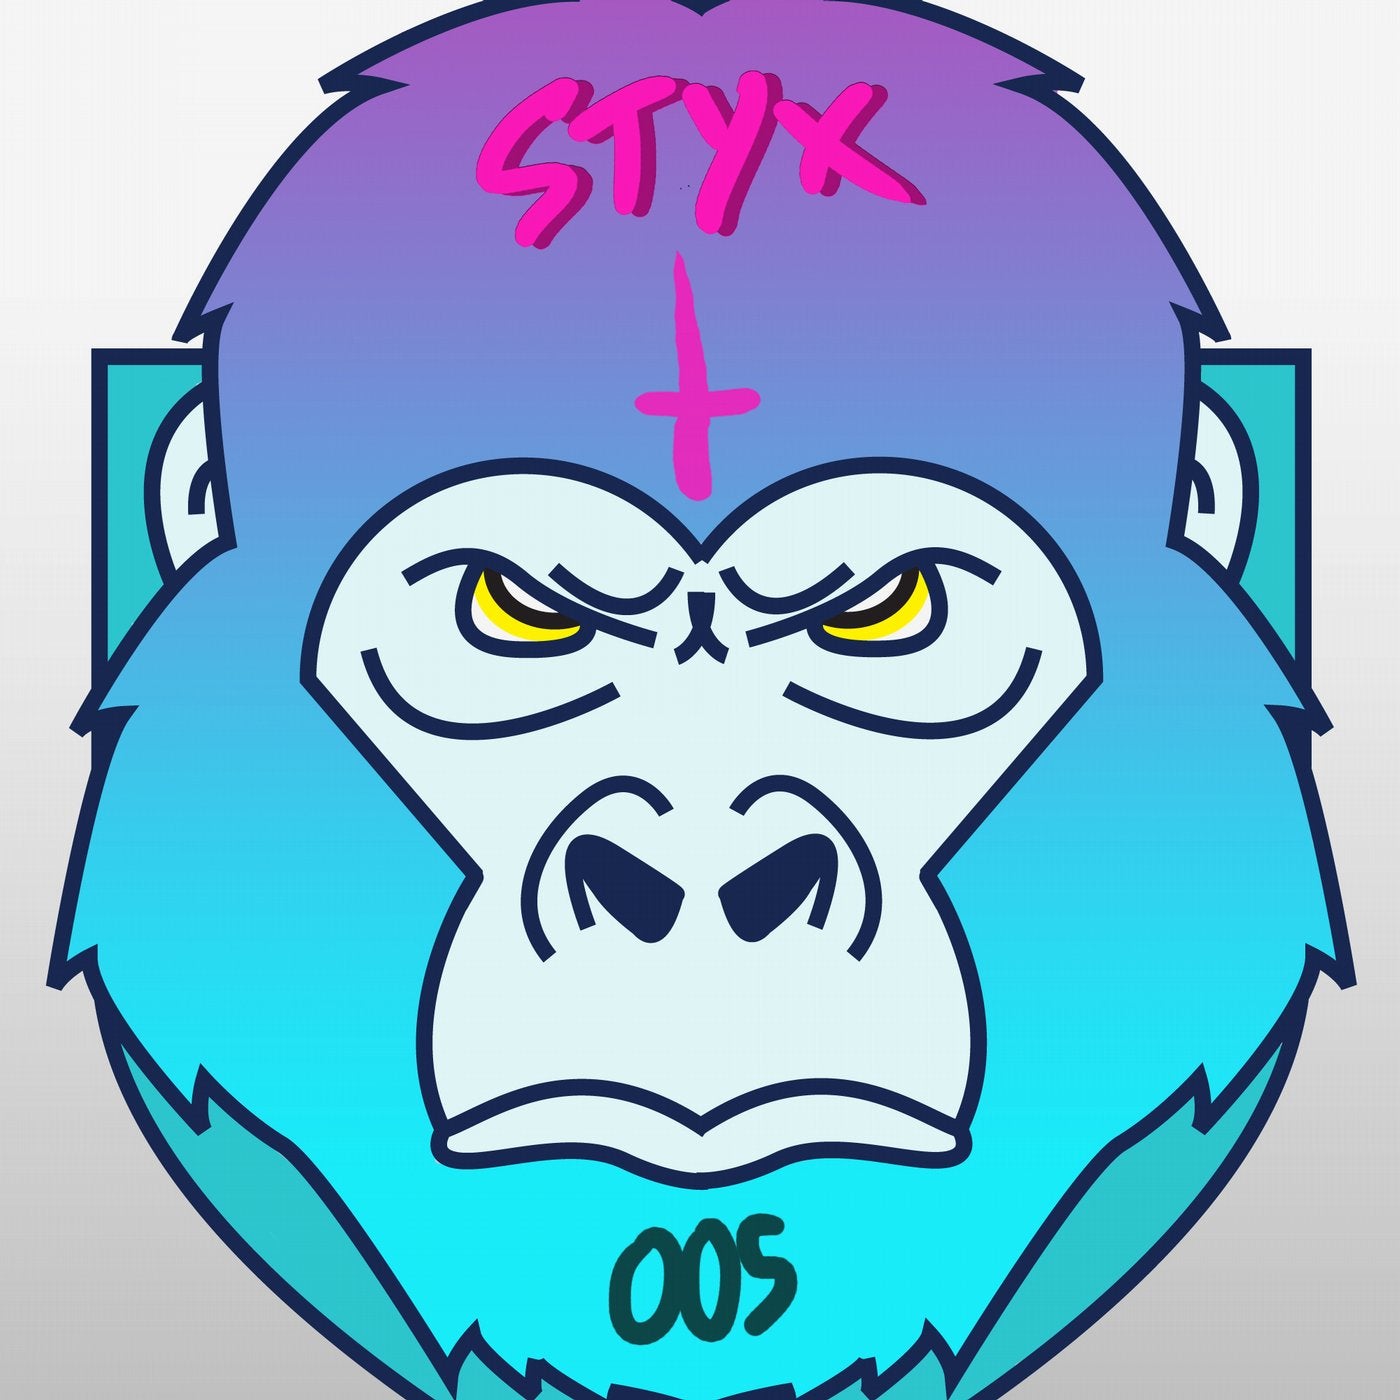 STYX005